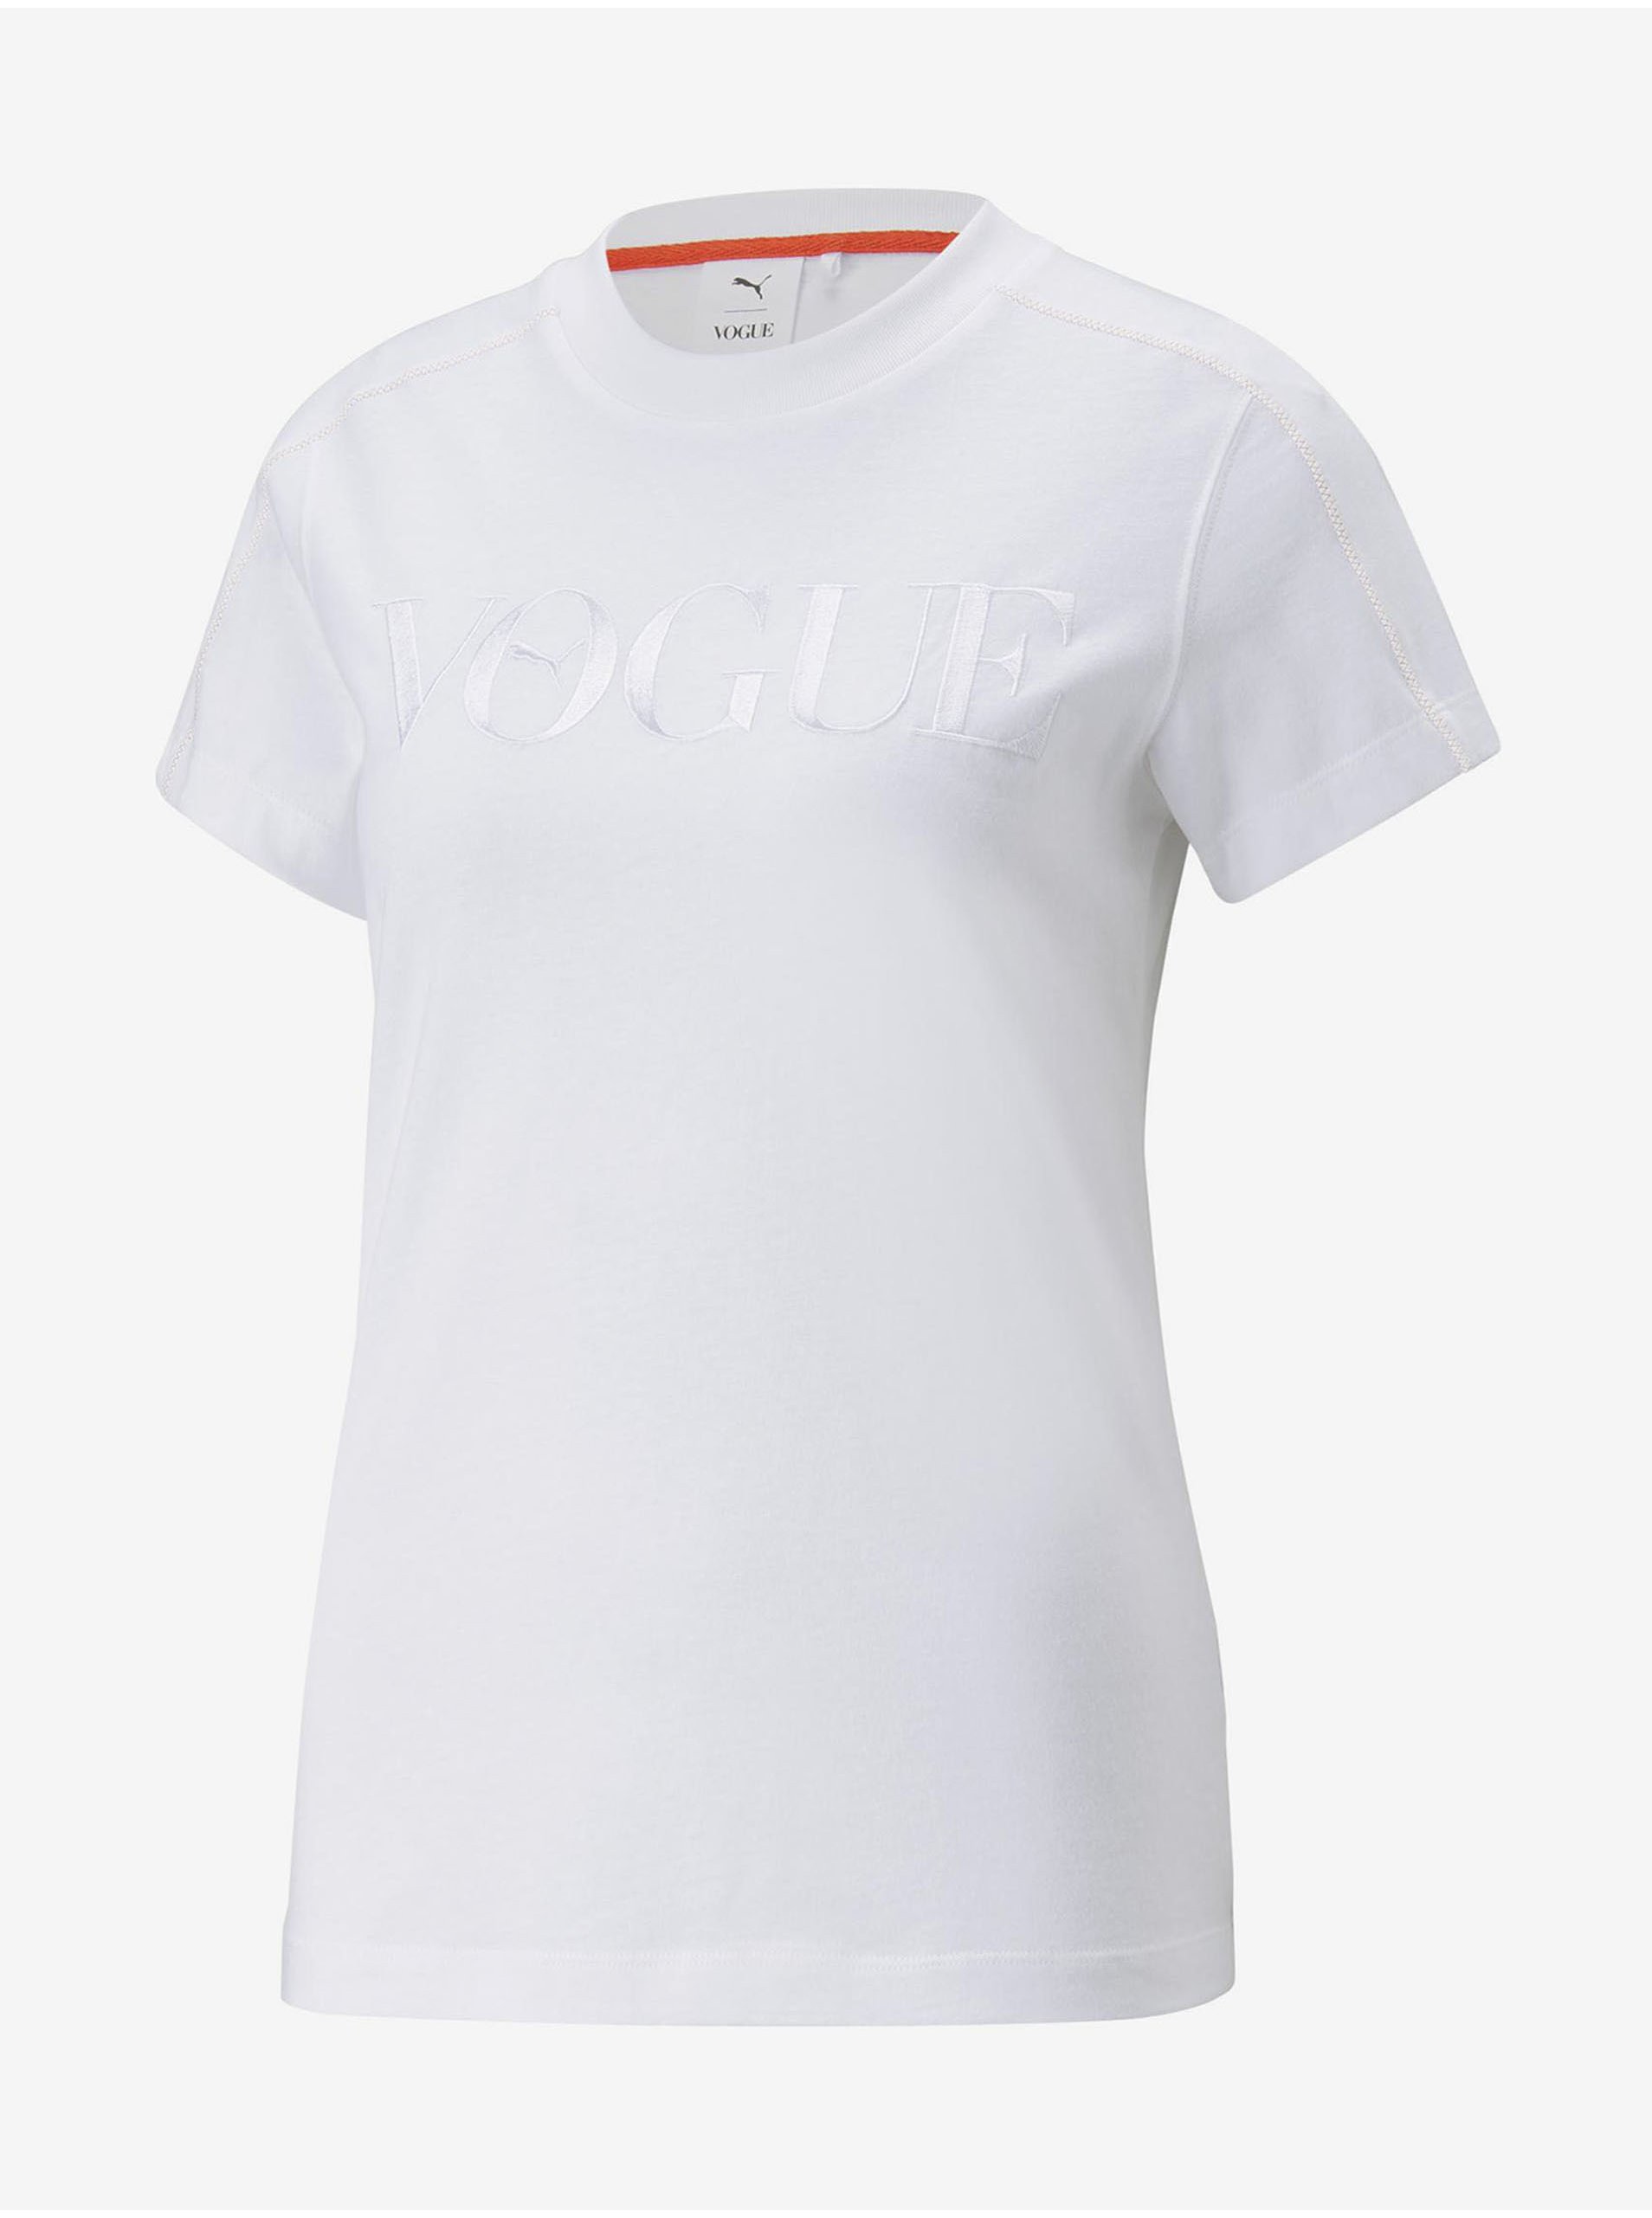 Lacno Biele dámske tričko Puma x VOGUE